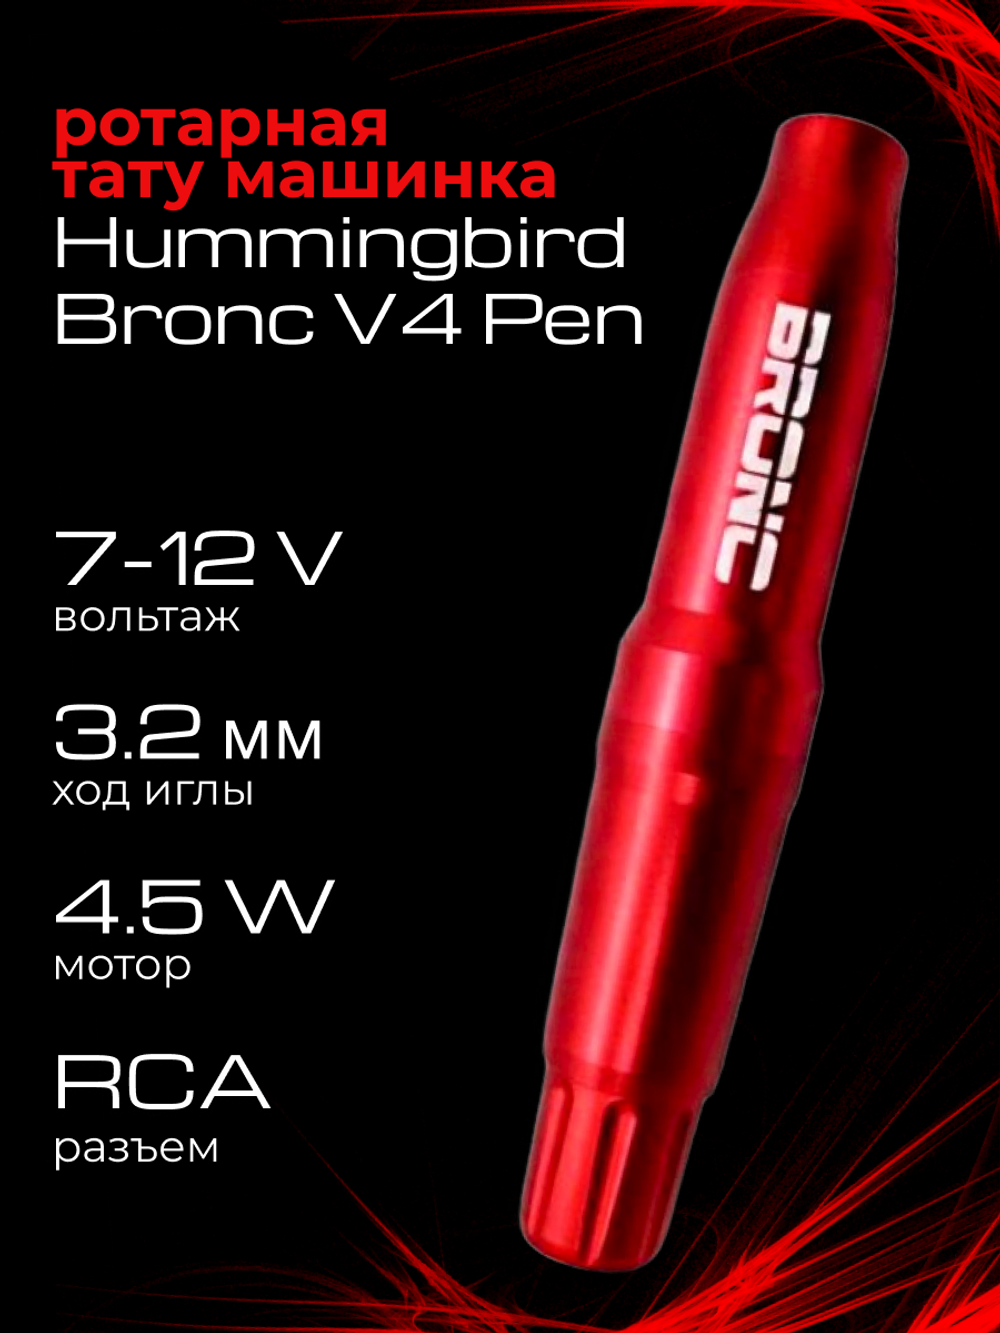 Hummingbird Bronc V4 Pen